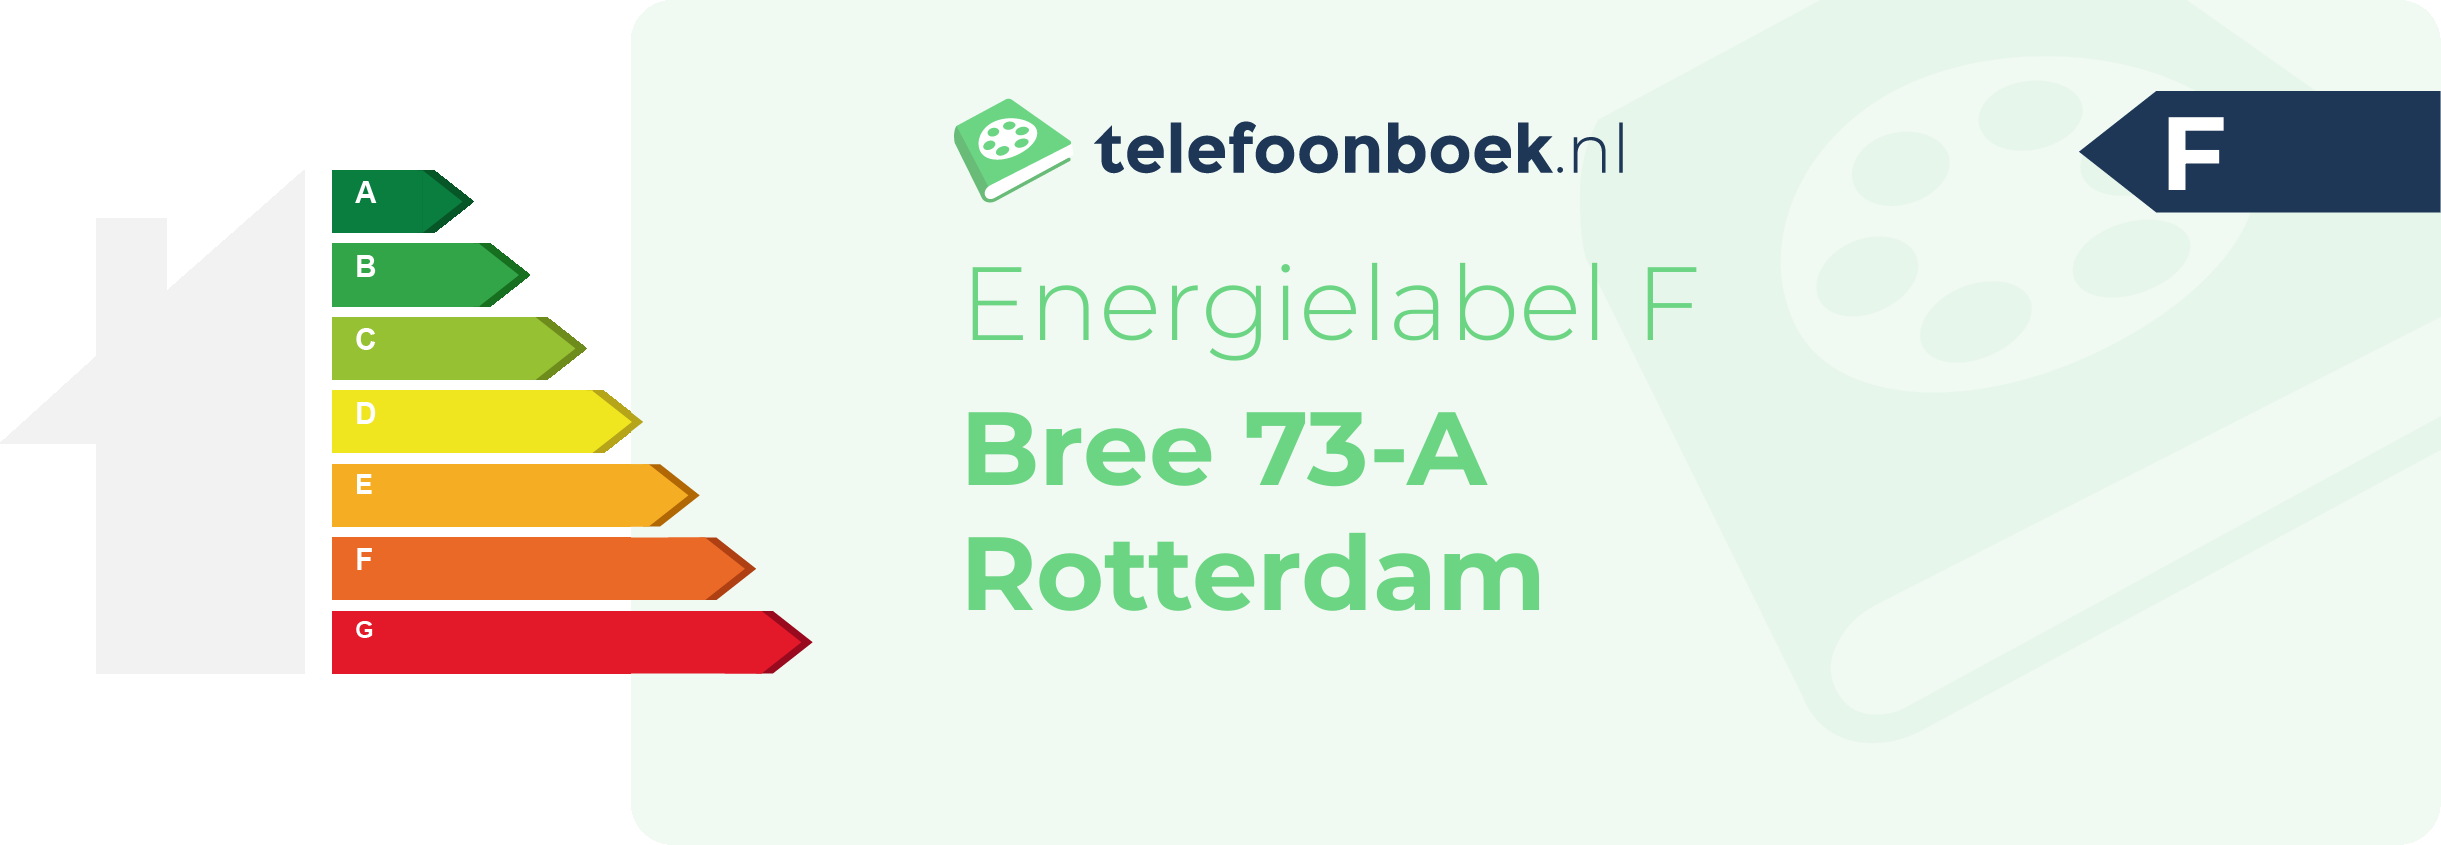 Energielabel Bree 73-A Rotterdam